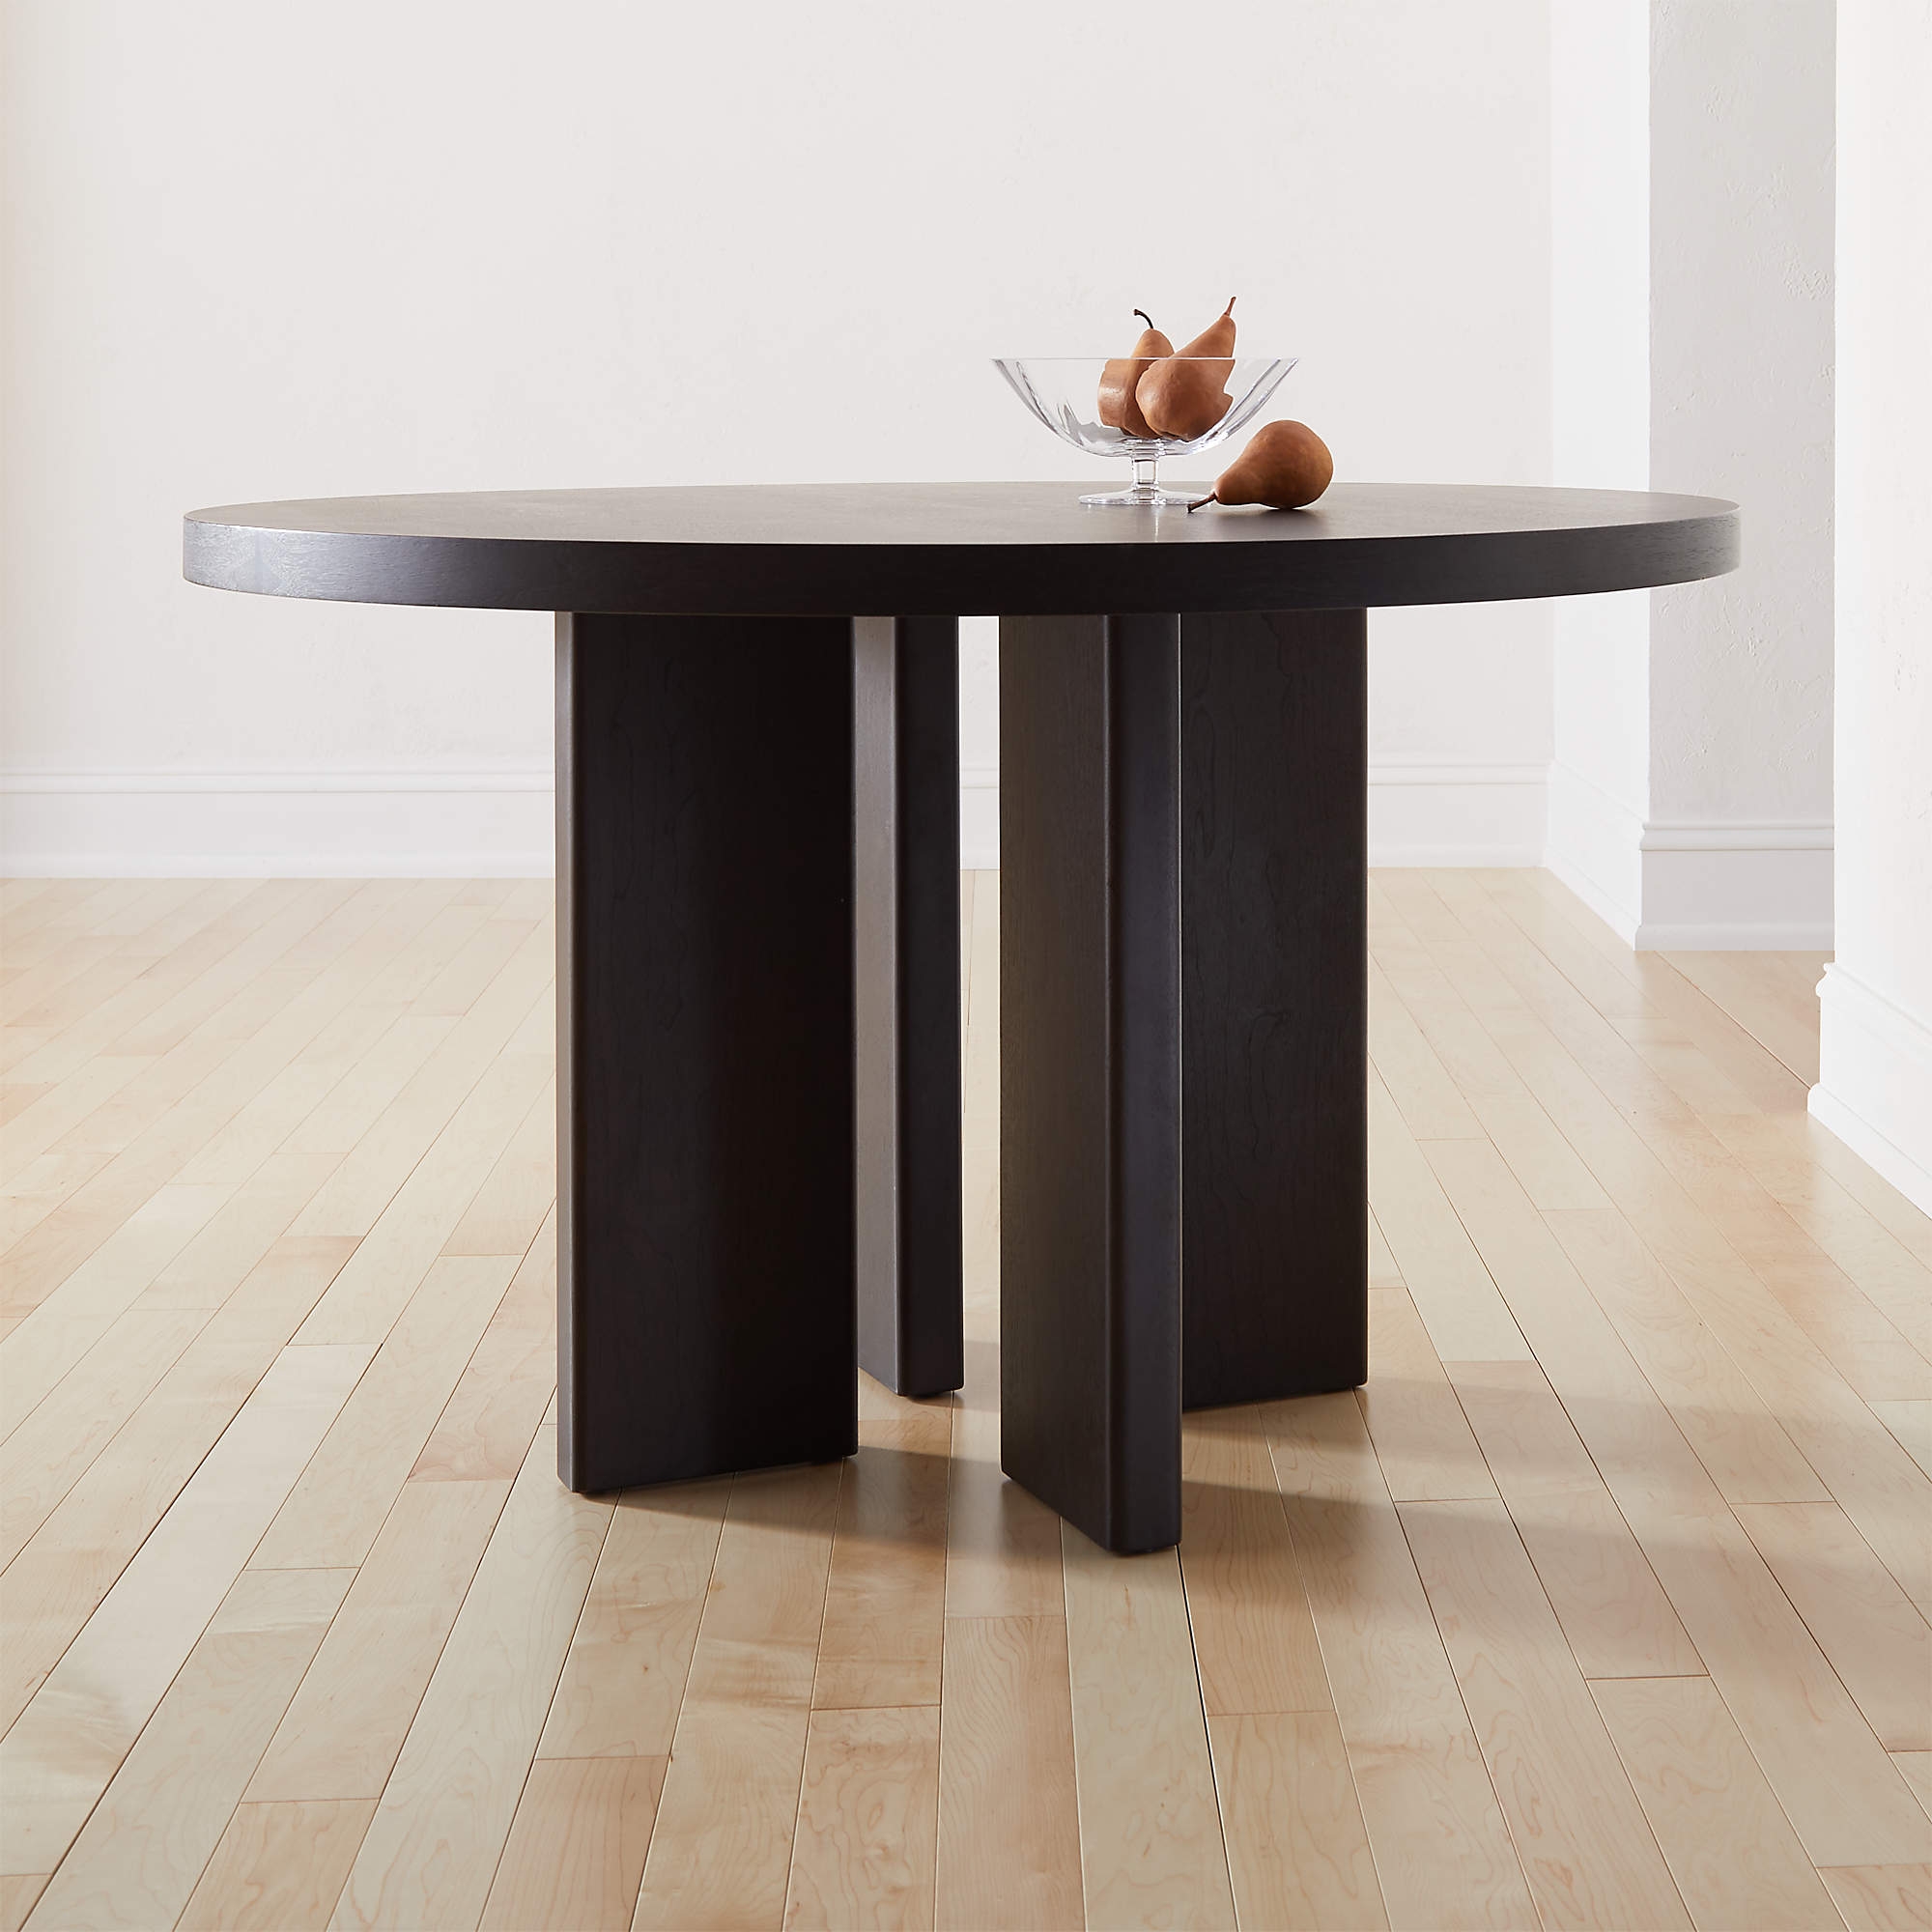 Shadow Blackened Wood Dining Table - Image 4